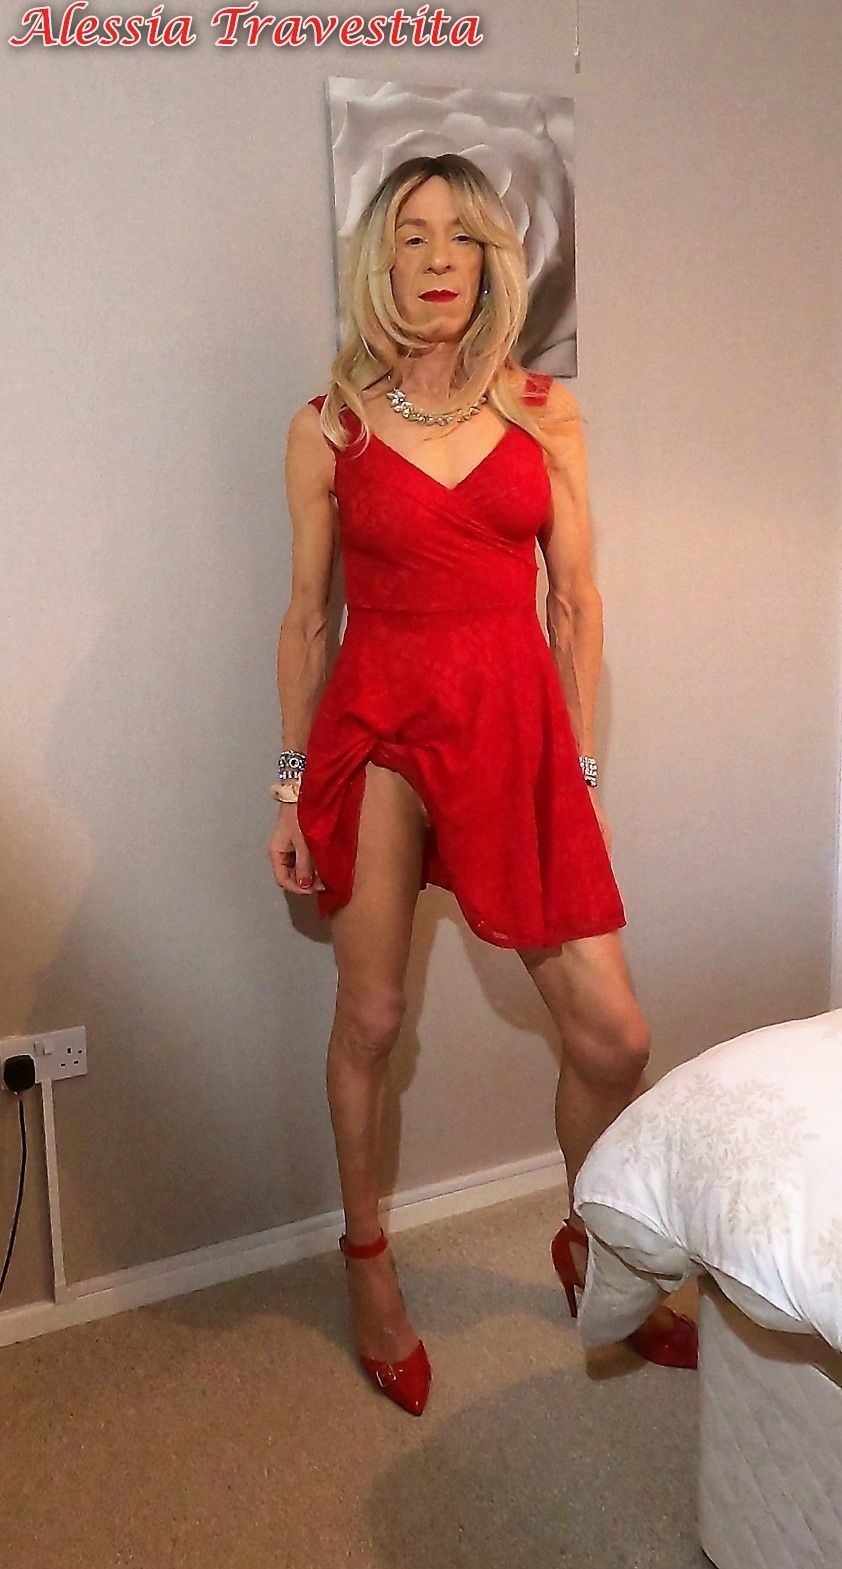 65 Alessia Travestita in Flirty Red Dress #12